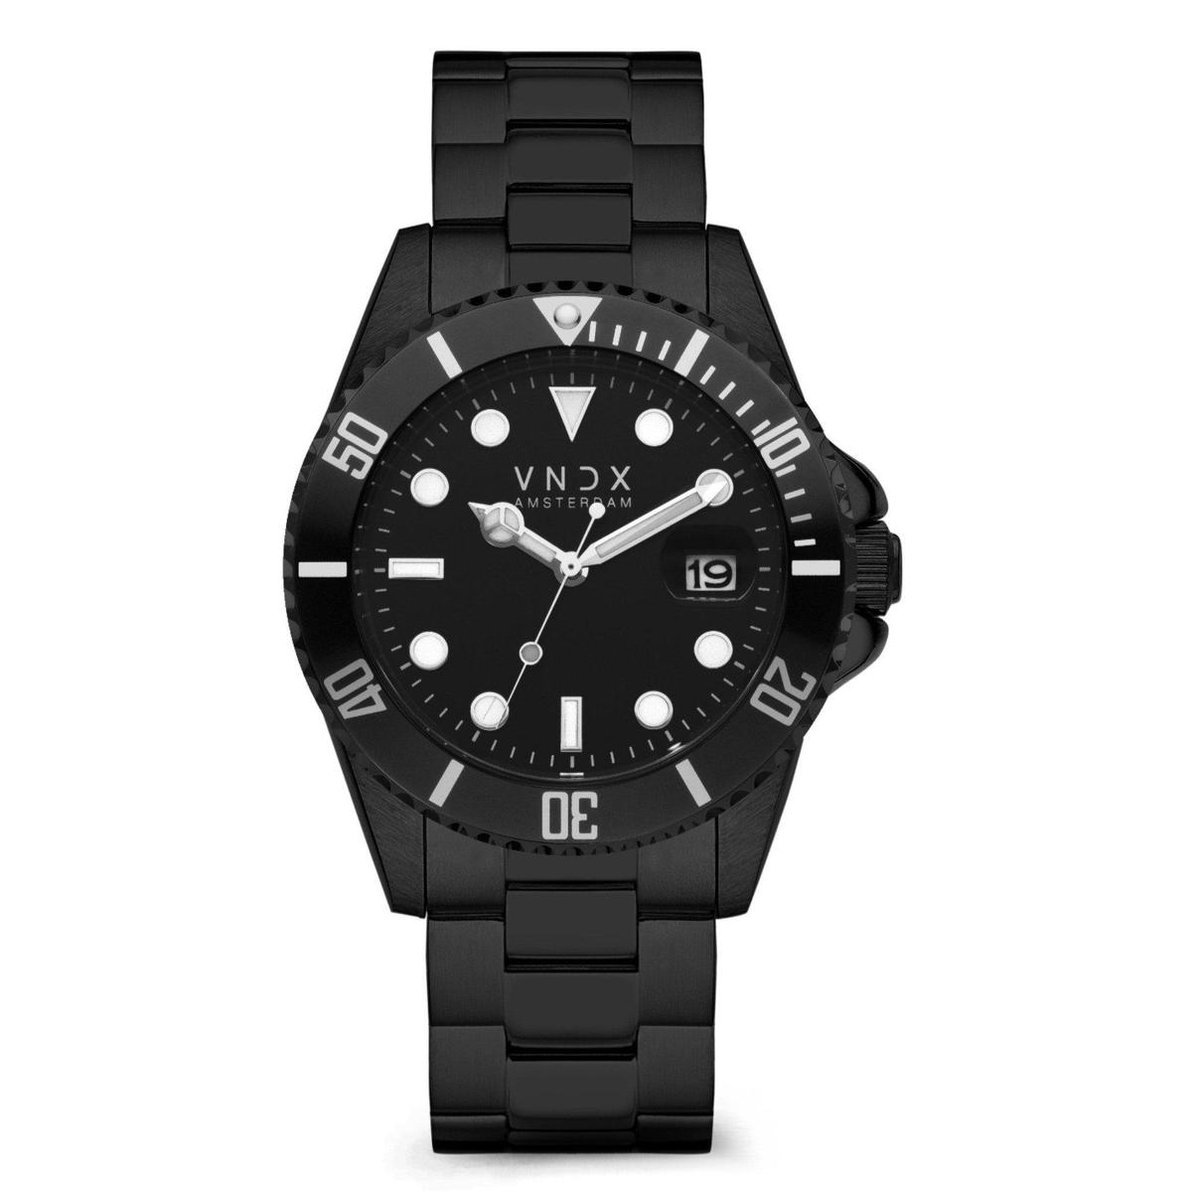 VNDX Amsterdam - Horloge voor mannen - Ams. Lxry. Black Edition